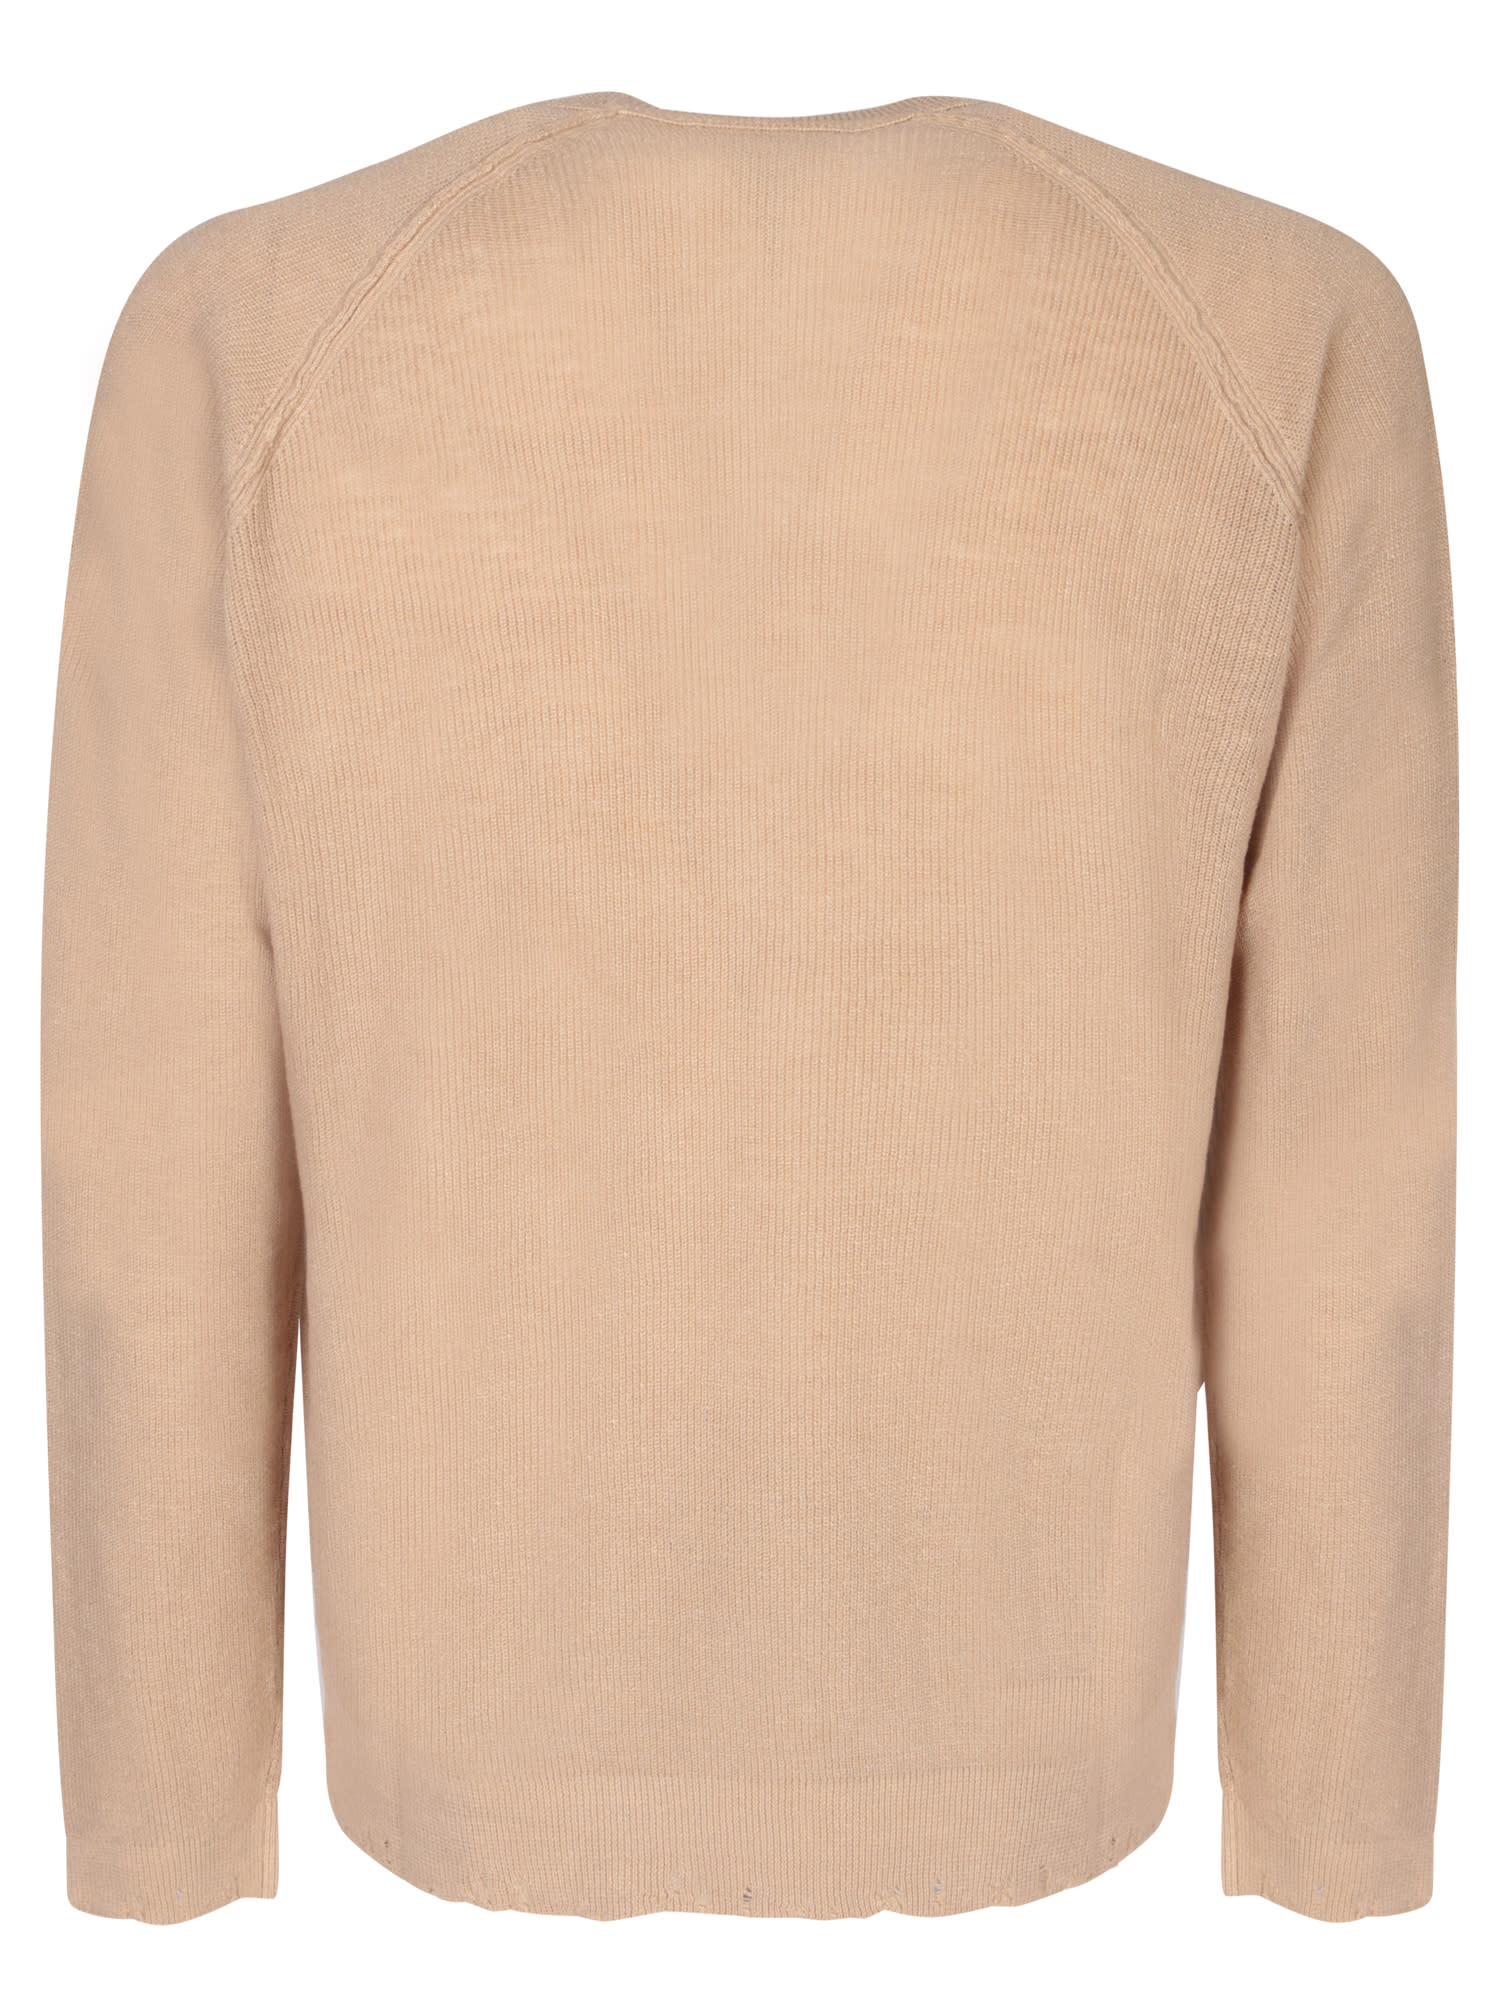 Shop Atomo Factory Beige Linen And Cotton Sweater